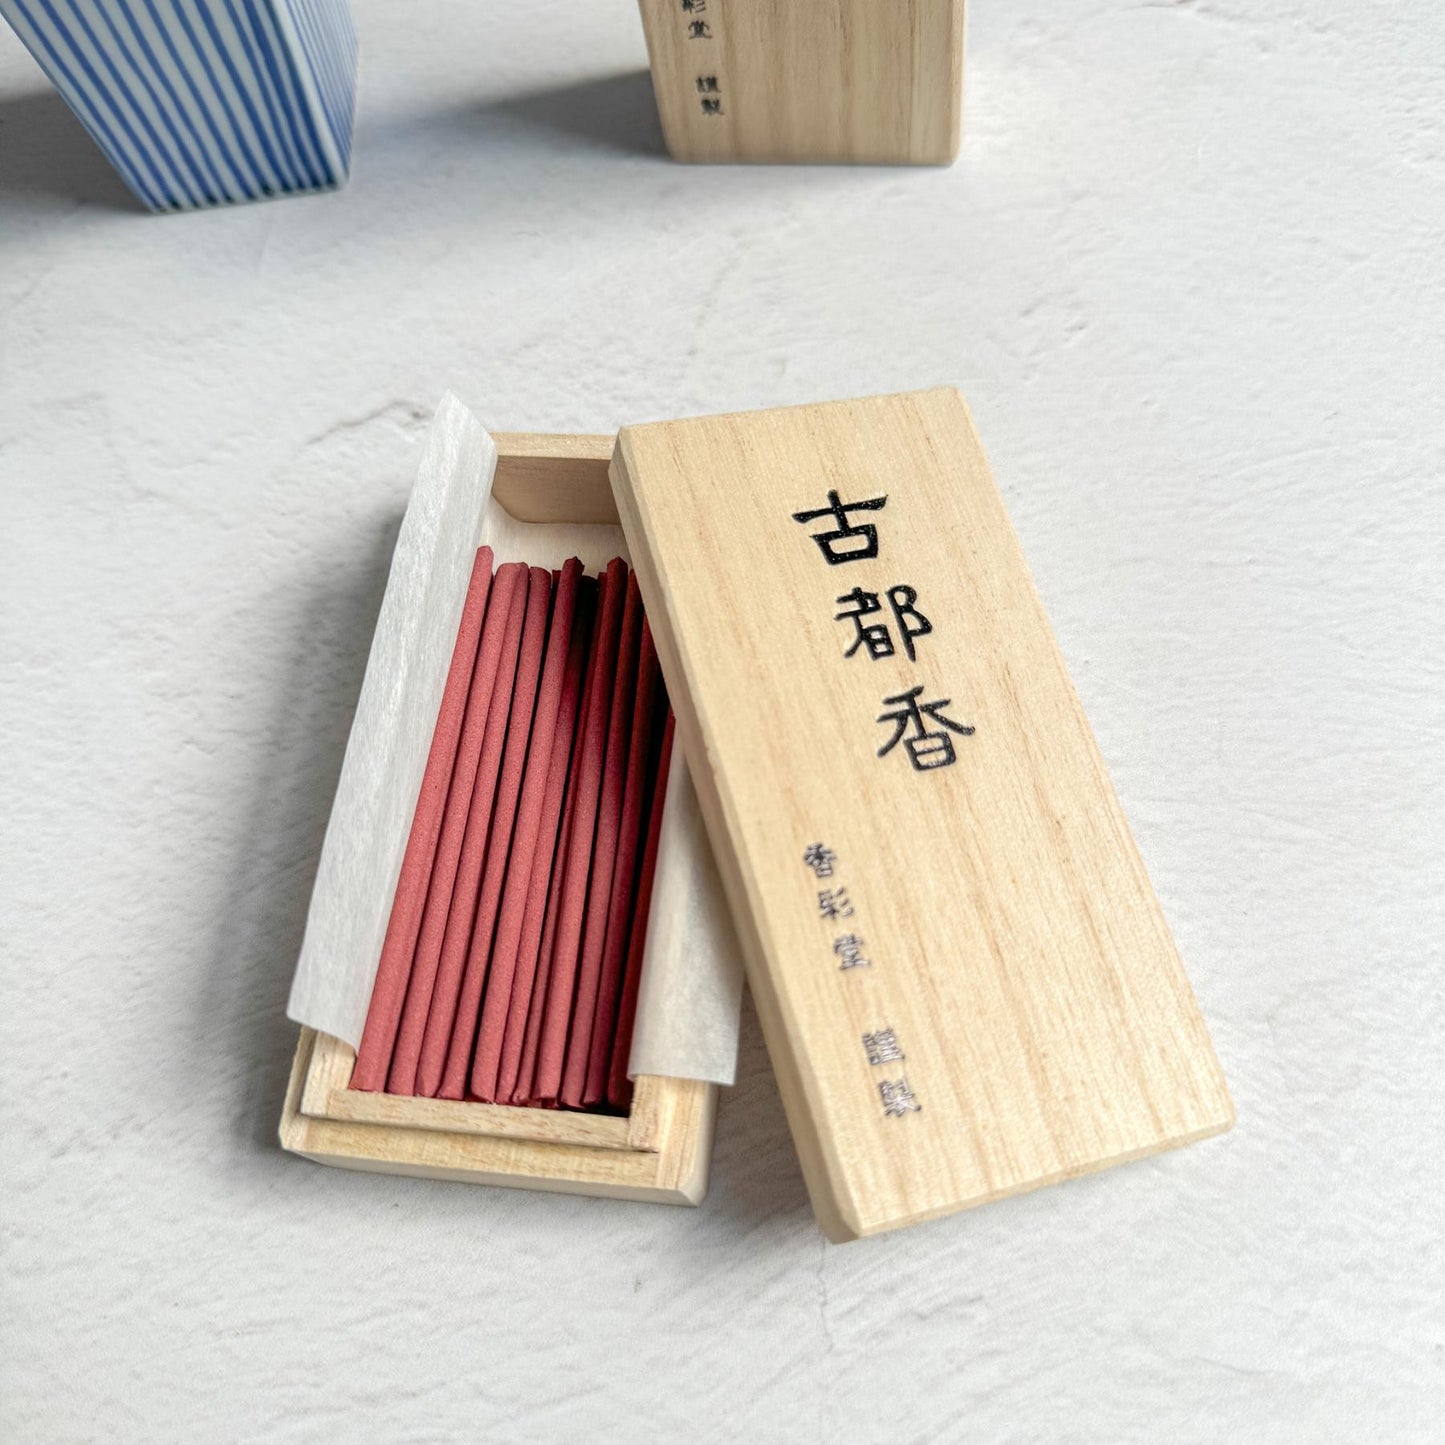 Japanese Incense "Koto no Kou" by Kousaido